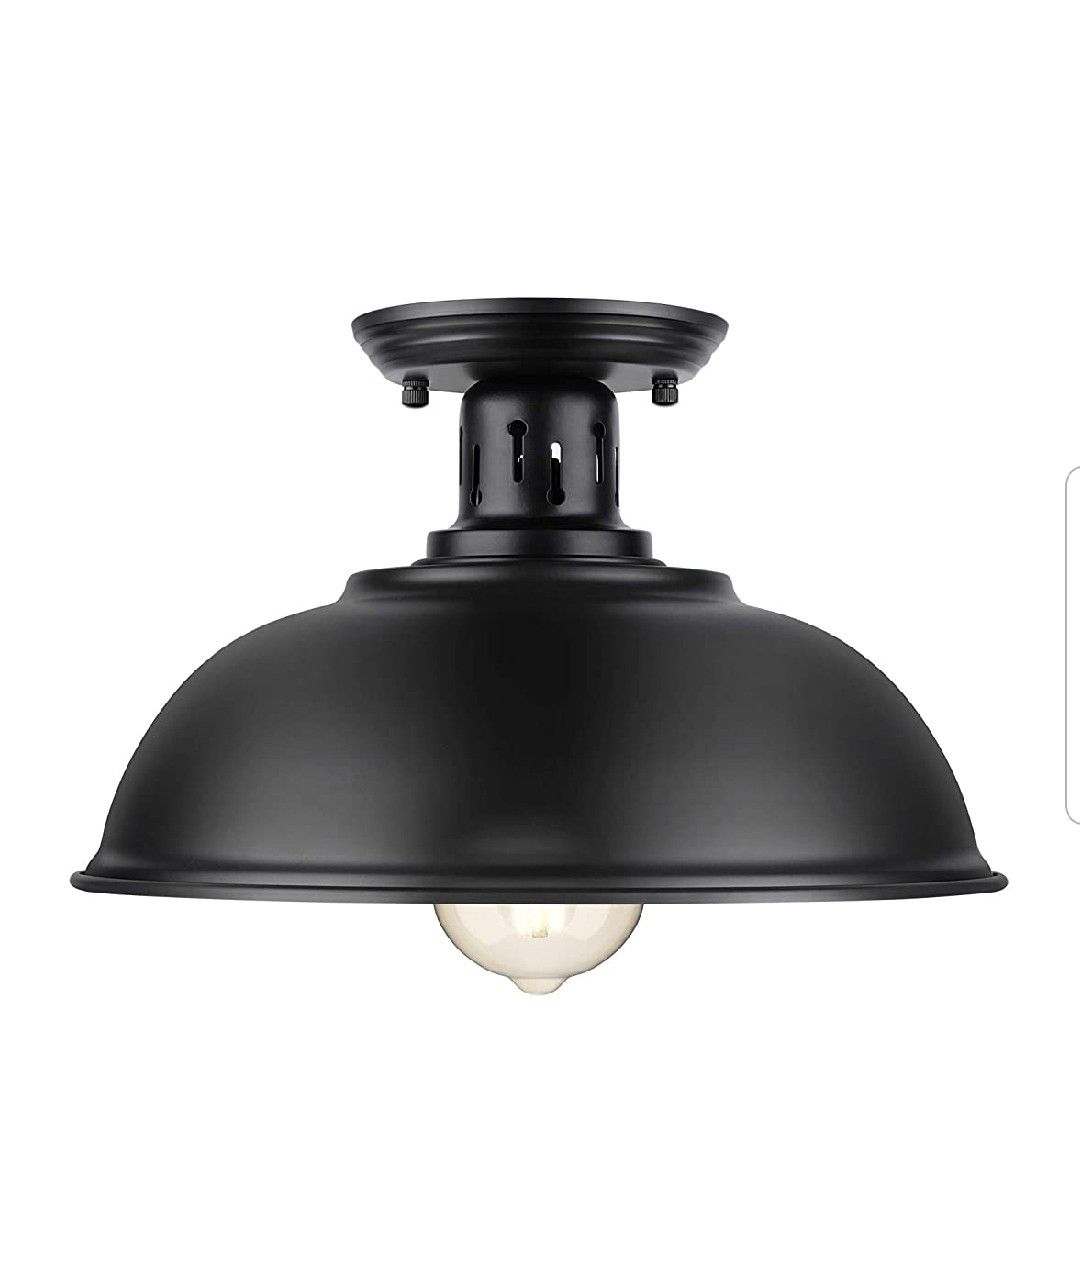 Farmhouse Semi Flush Mount Ceiling Light Fixture, E26 Medium Base, Industrial Black Pendant Lamp Shade